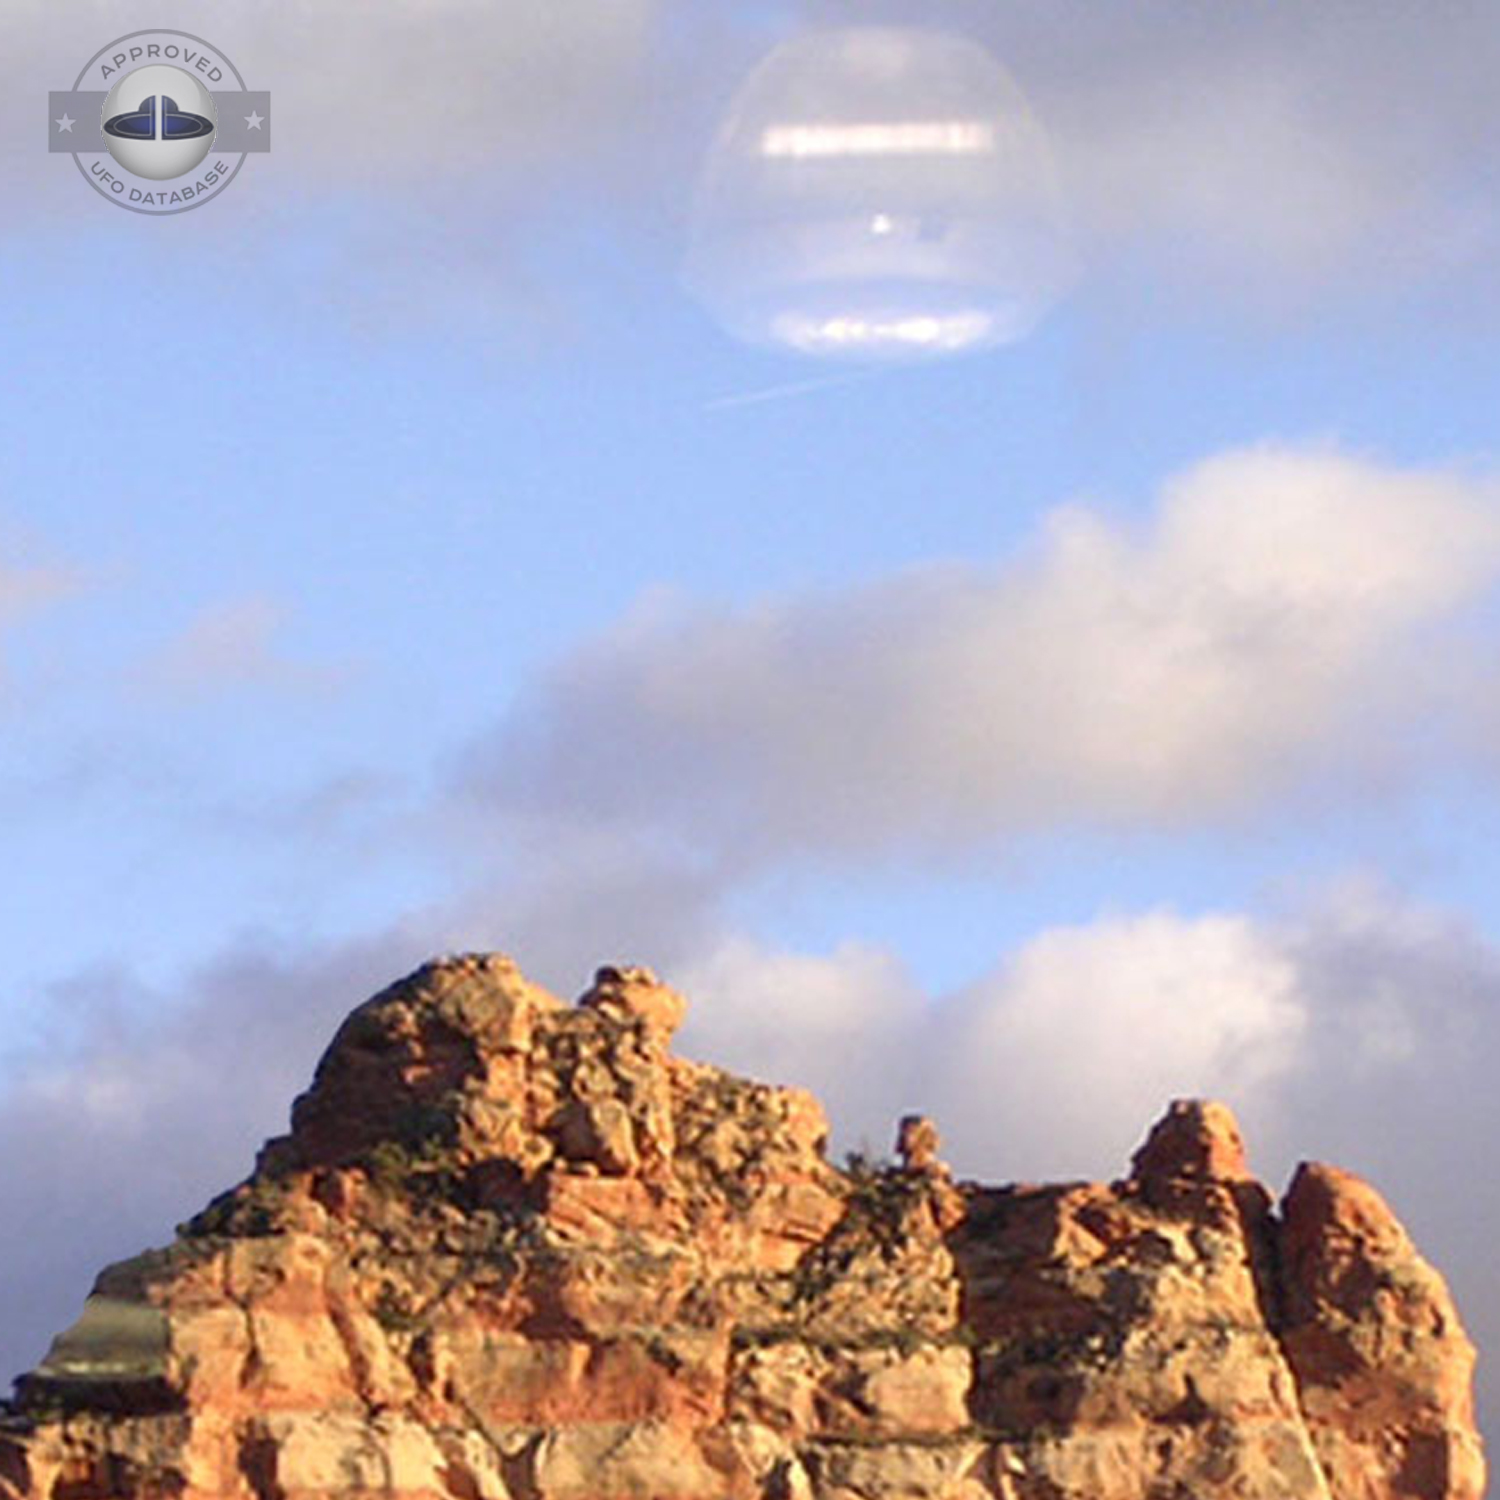 UFO Flying over mountain in the desert of Arizona near Sedona UFO Picture #14-3